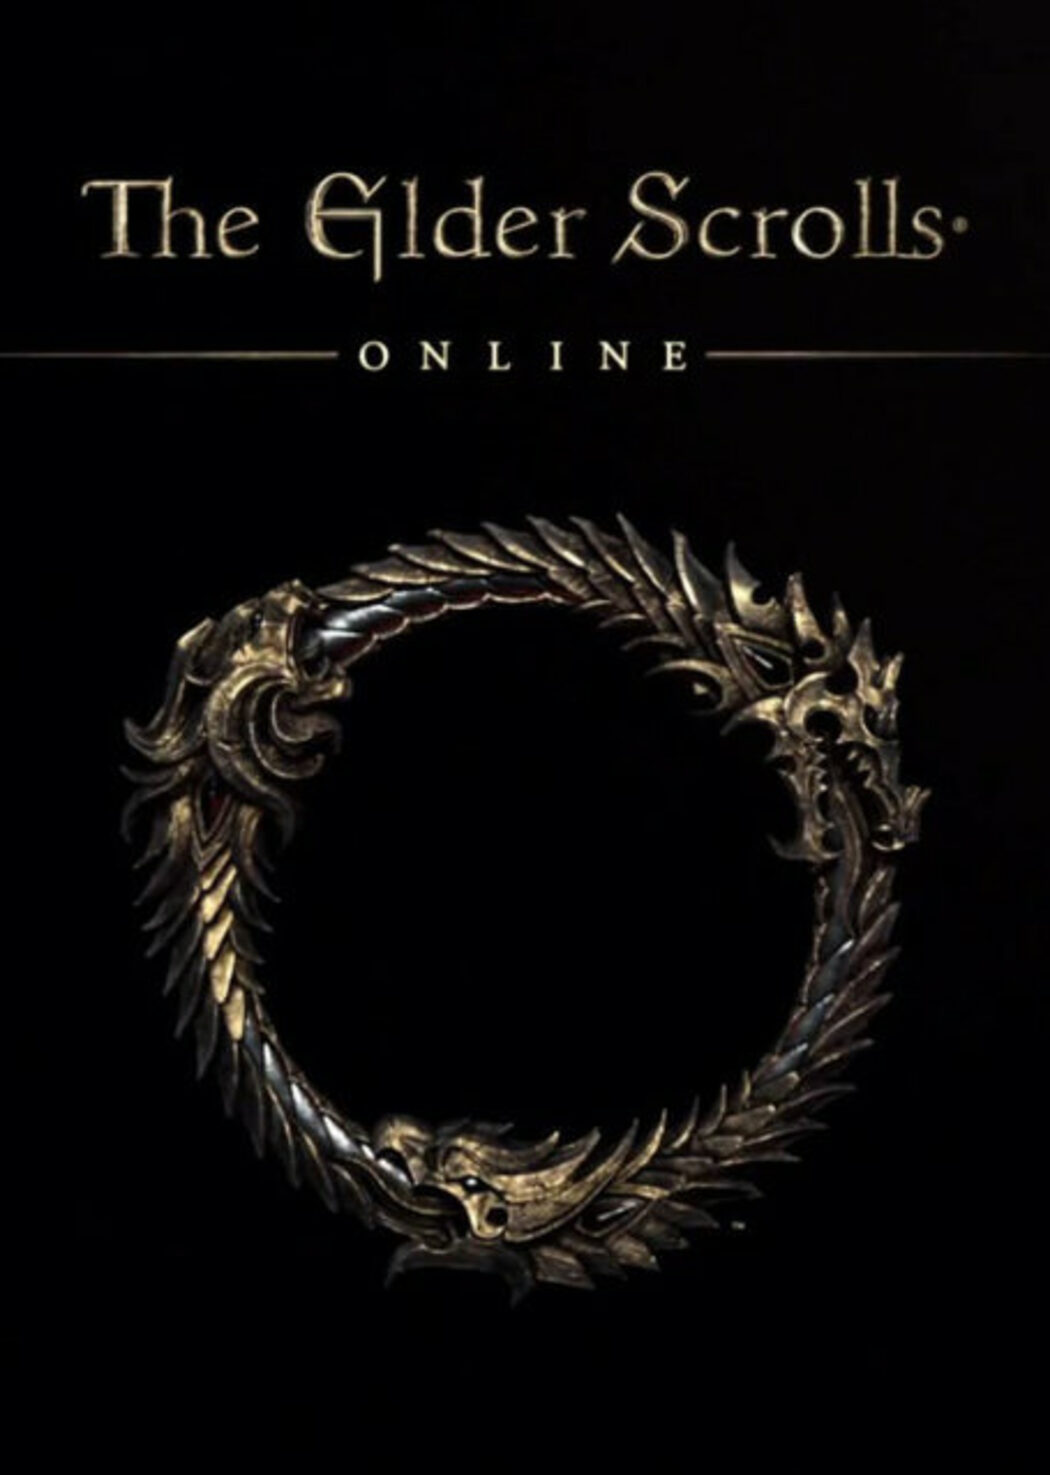 The Elder Scrolls Online: Tamriel Unlimited system requirements